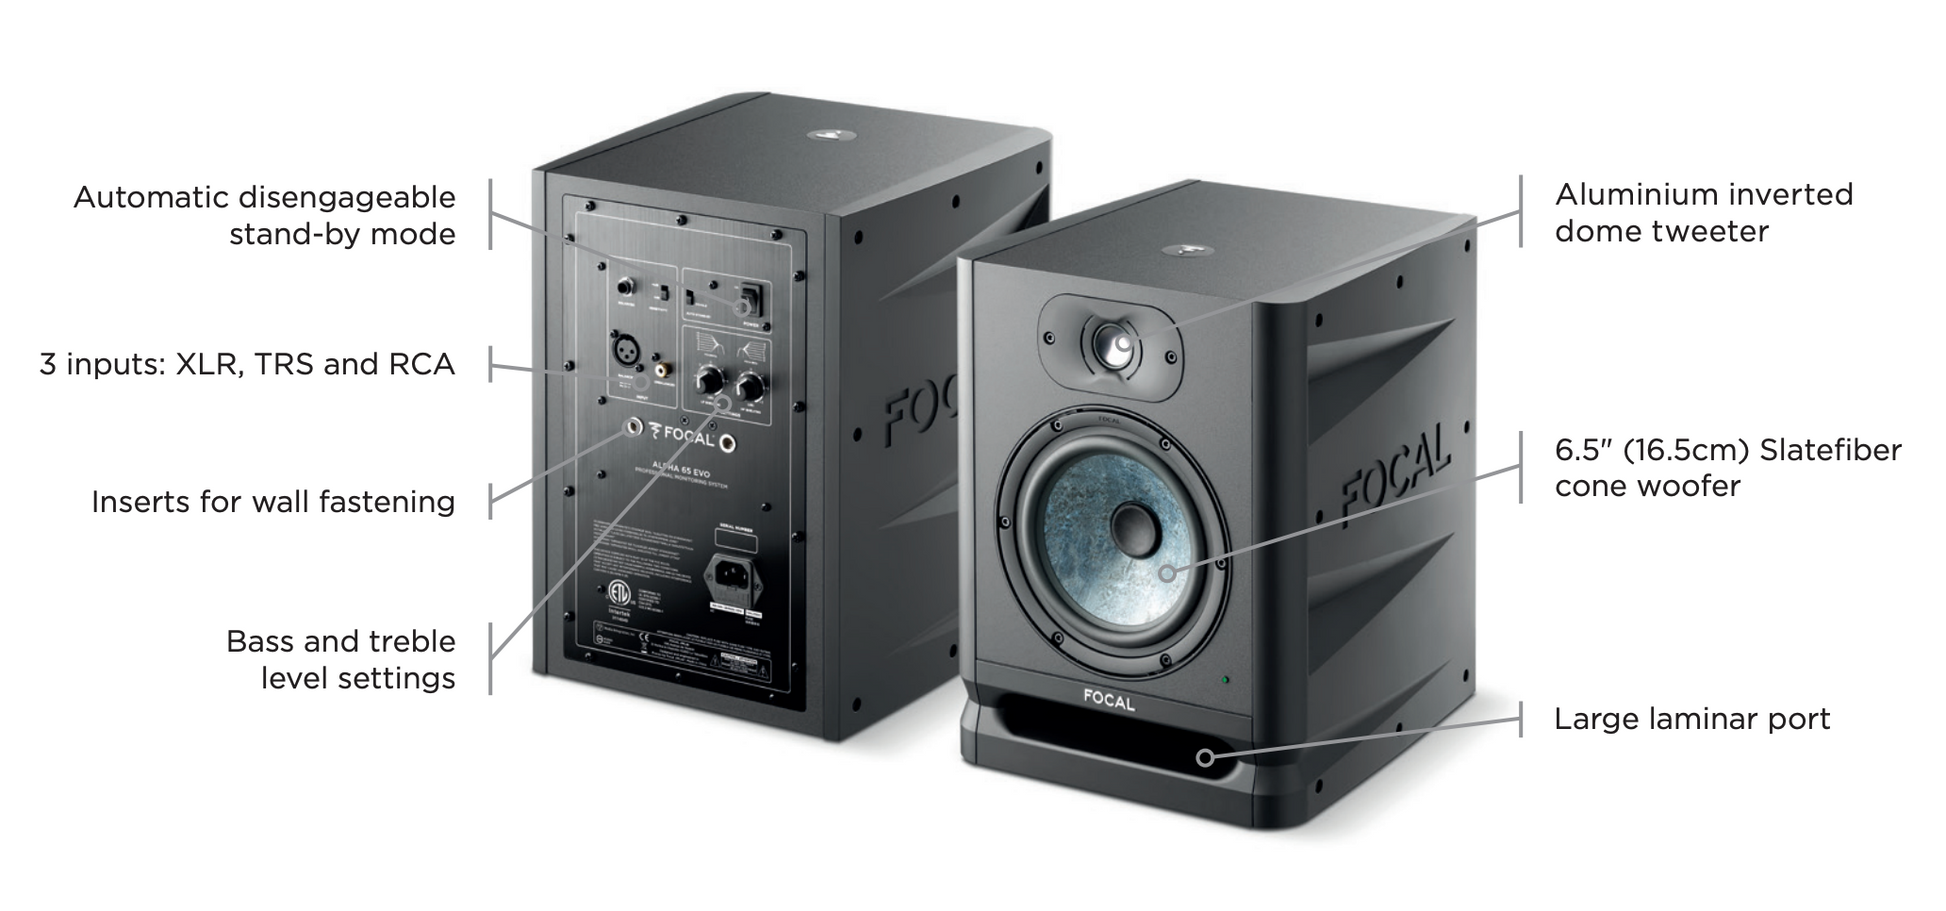 Focal Pro Studio monitors Focal EVO65 Active Studio Monitors (pair). Image shows product features